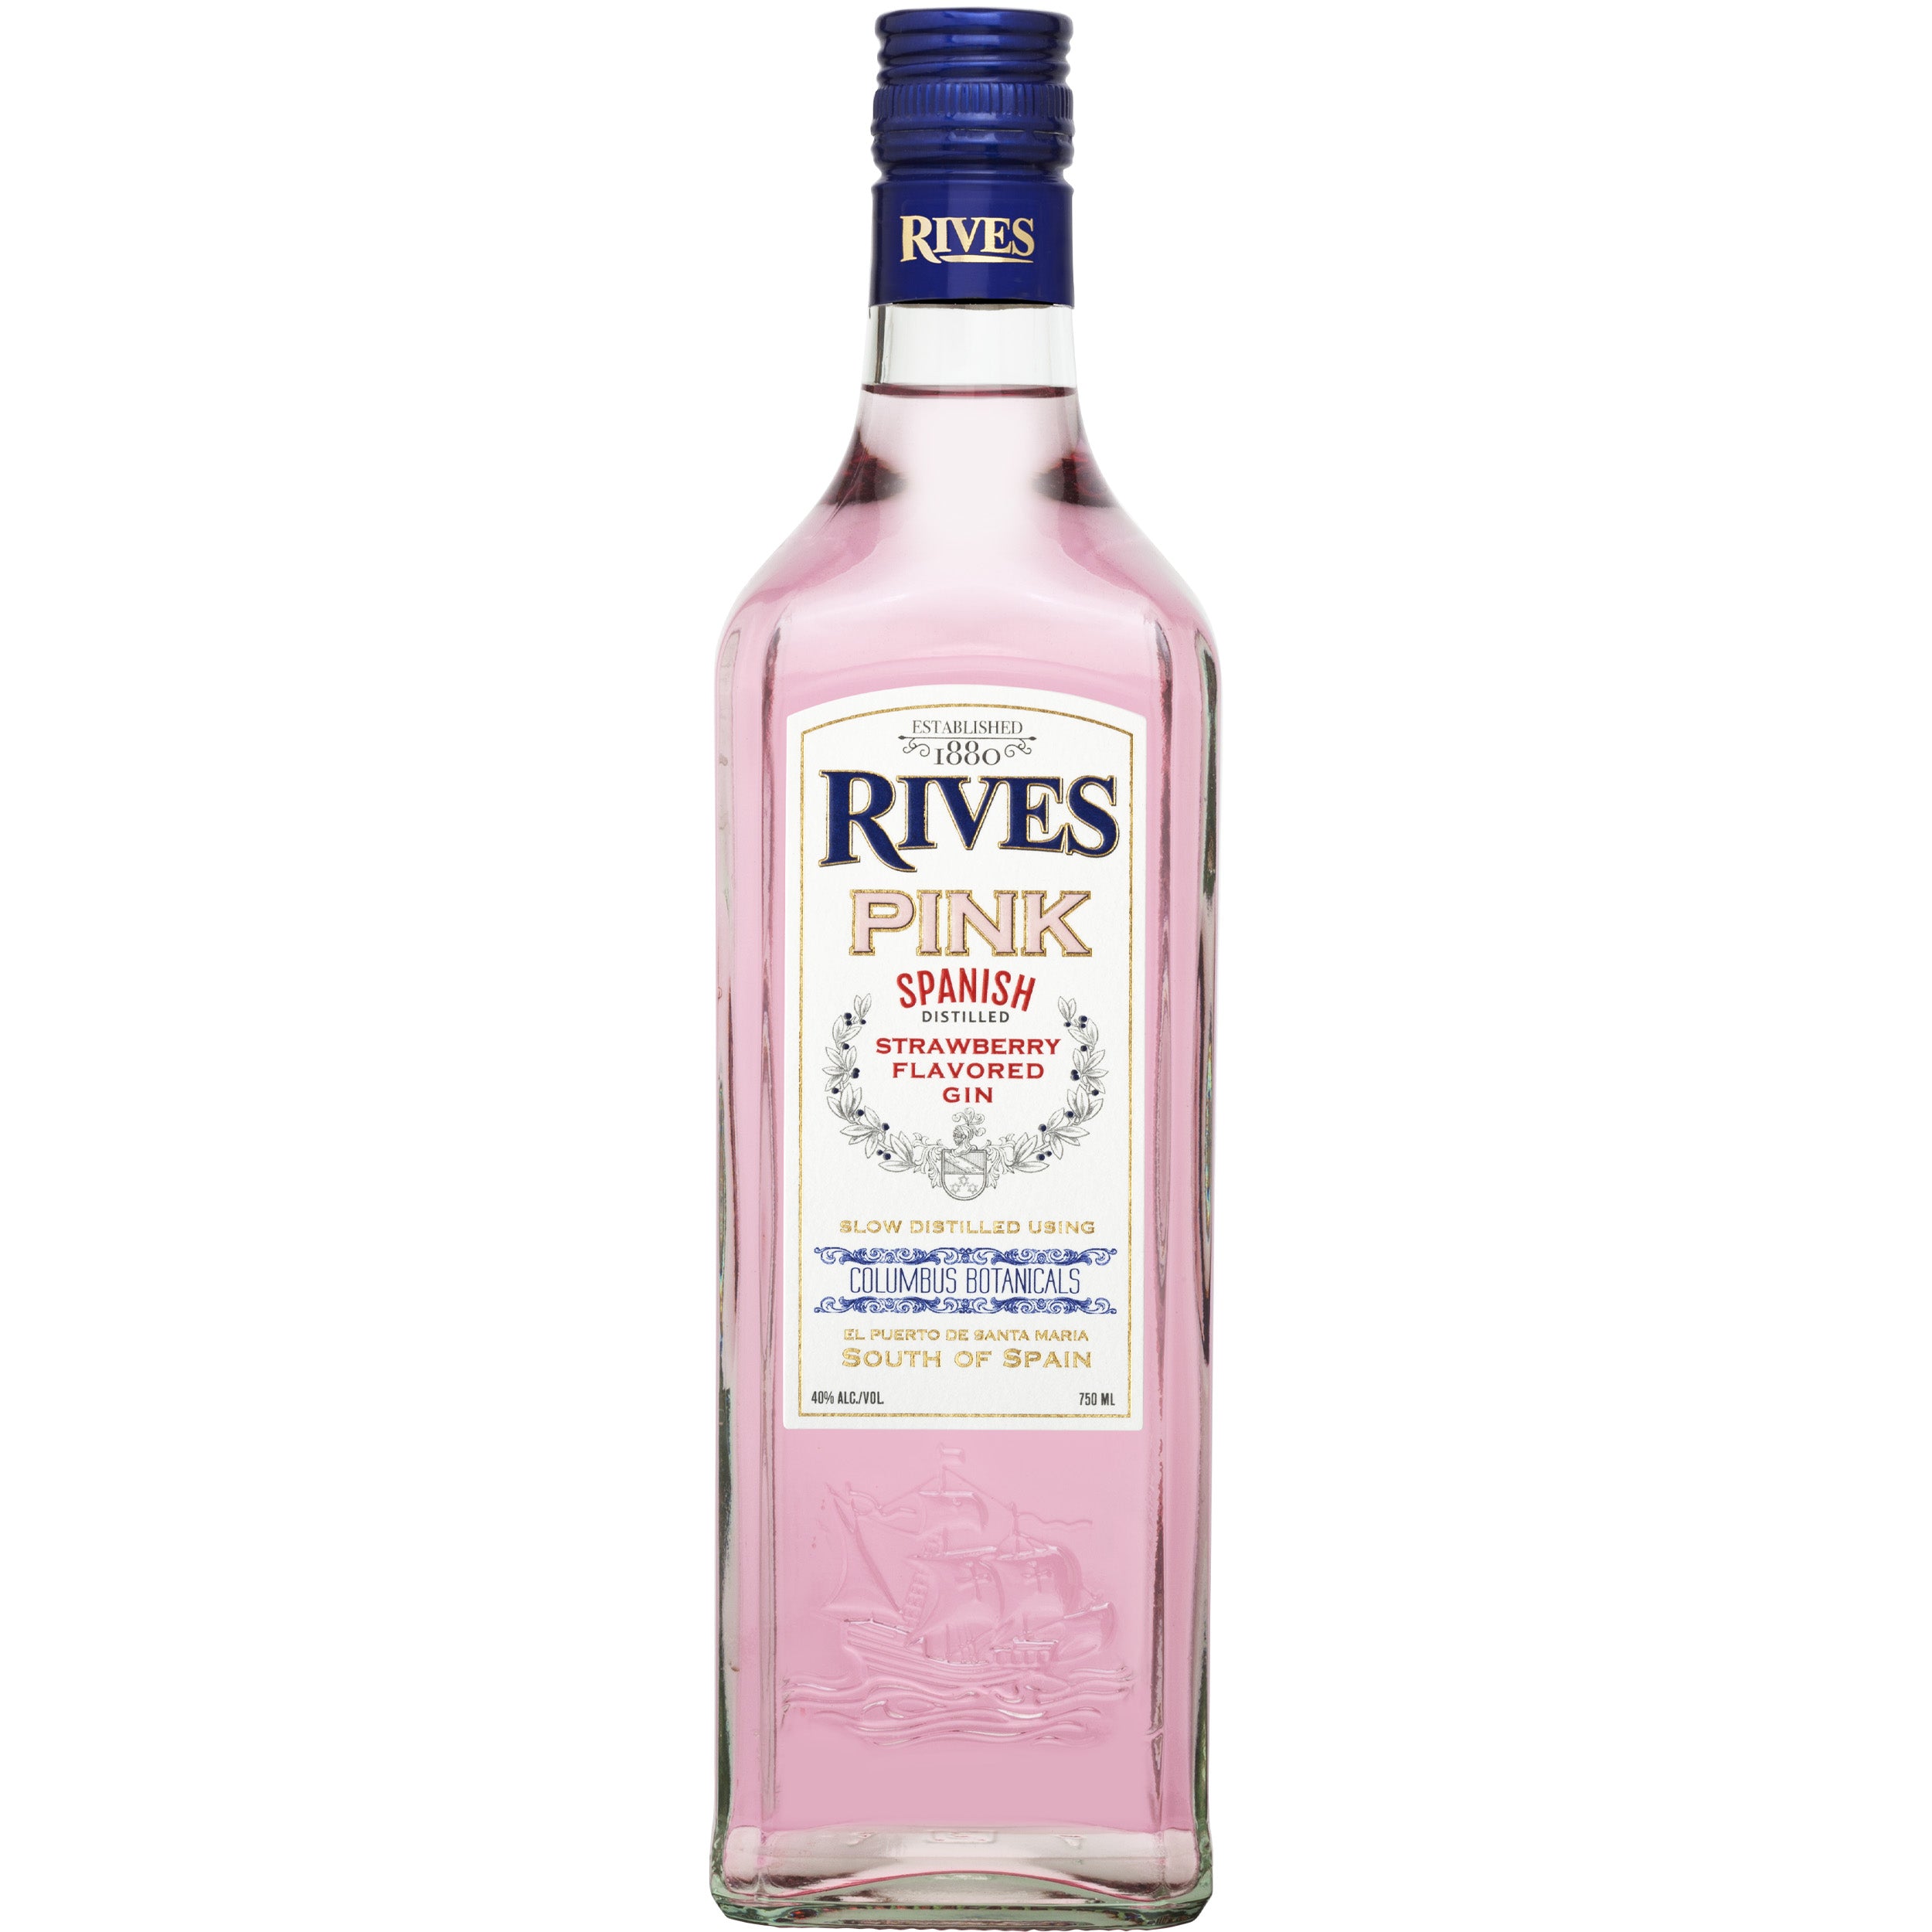 – Pink Liquor Chips Spanish Rives Gin